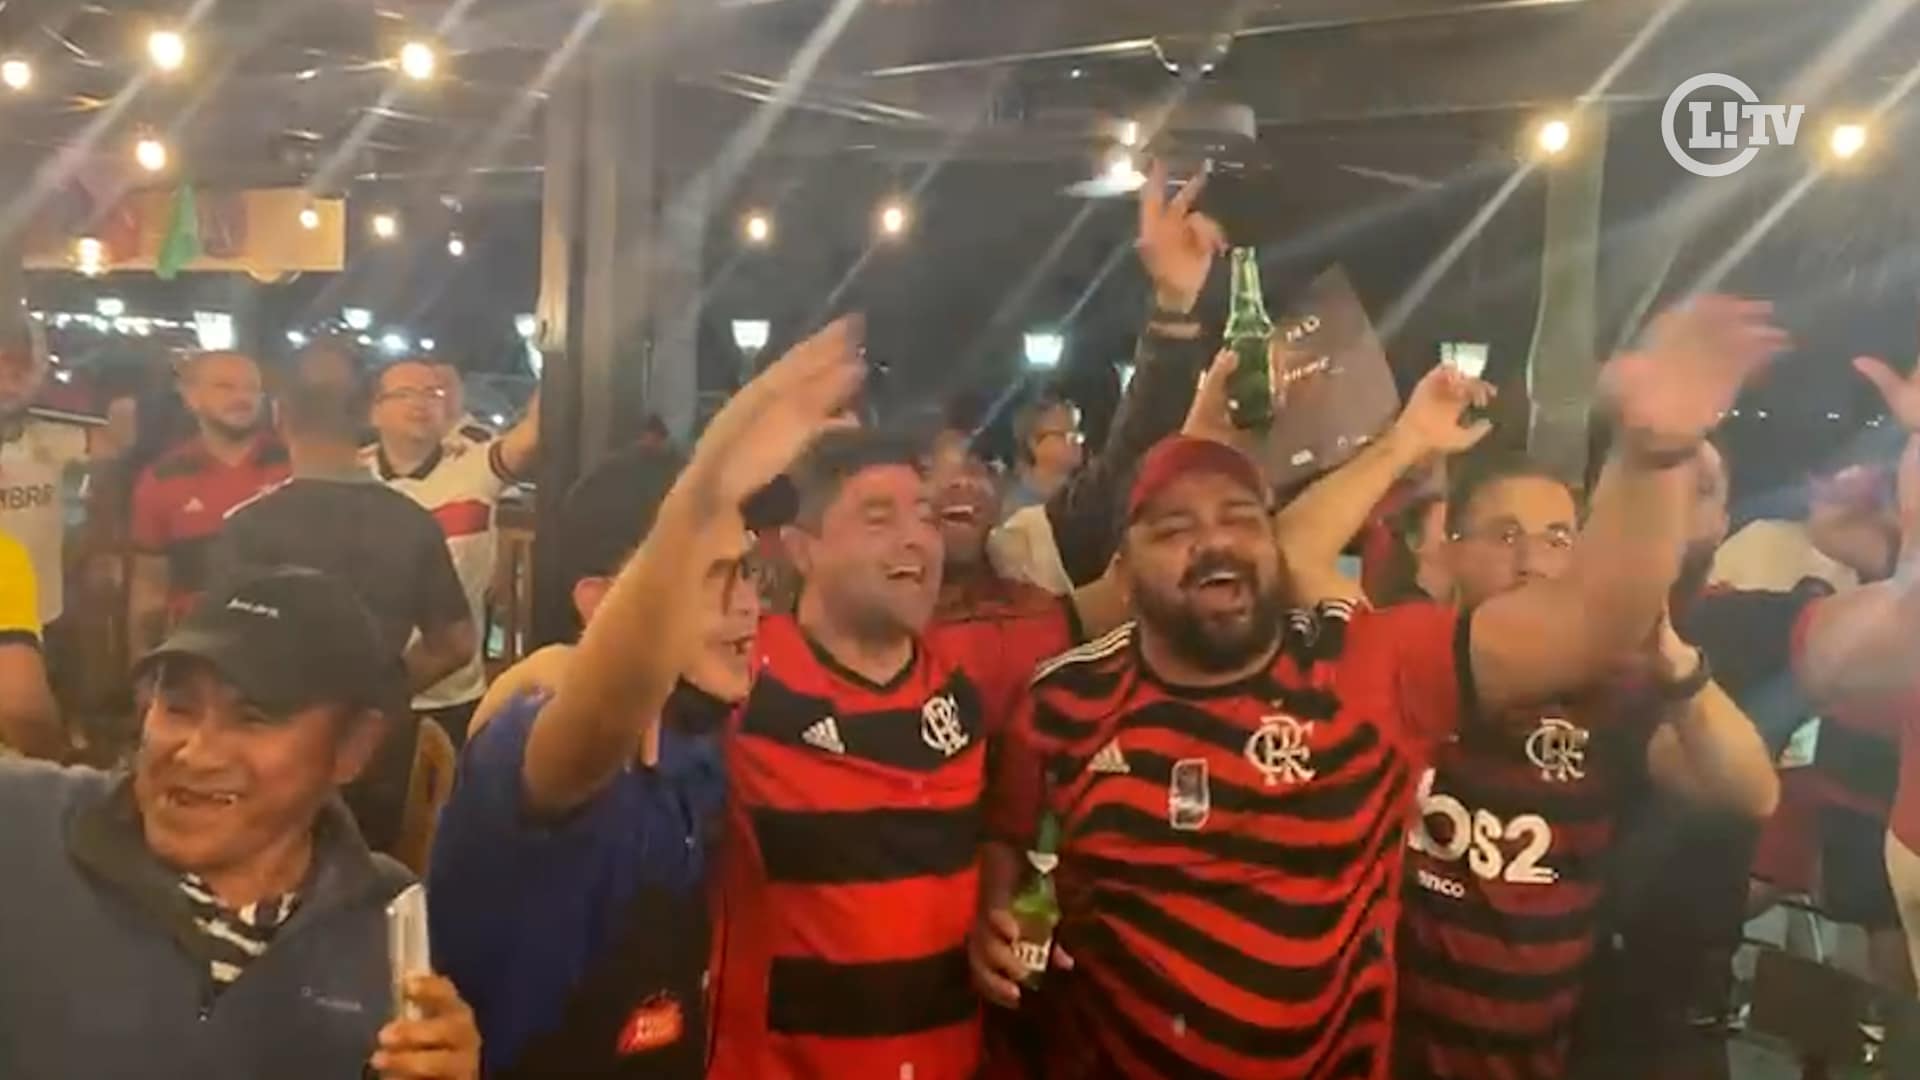 Torcida do Flamengo em Guayaquil